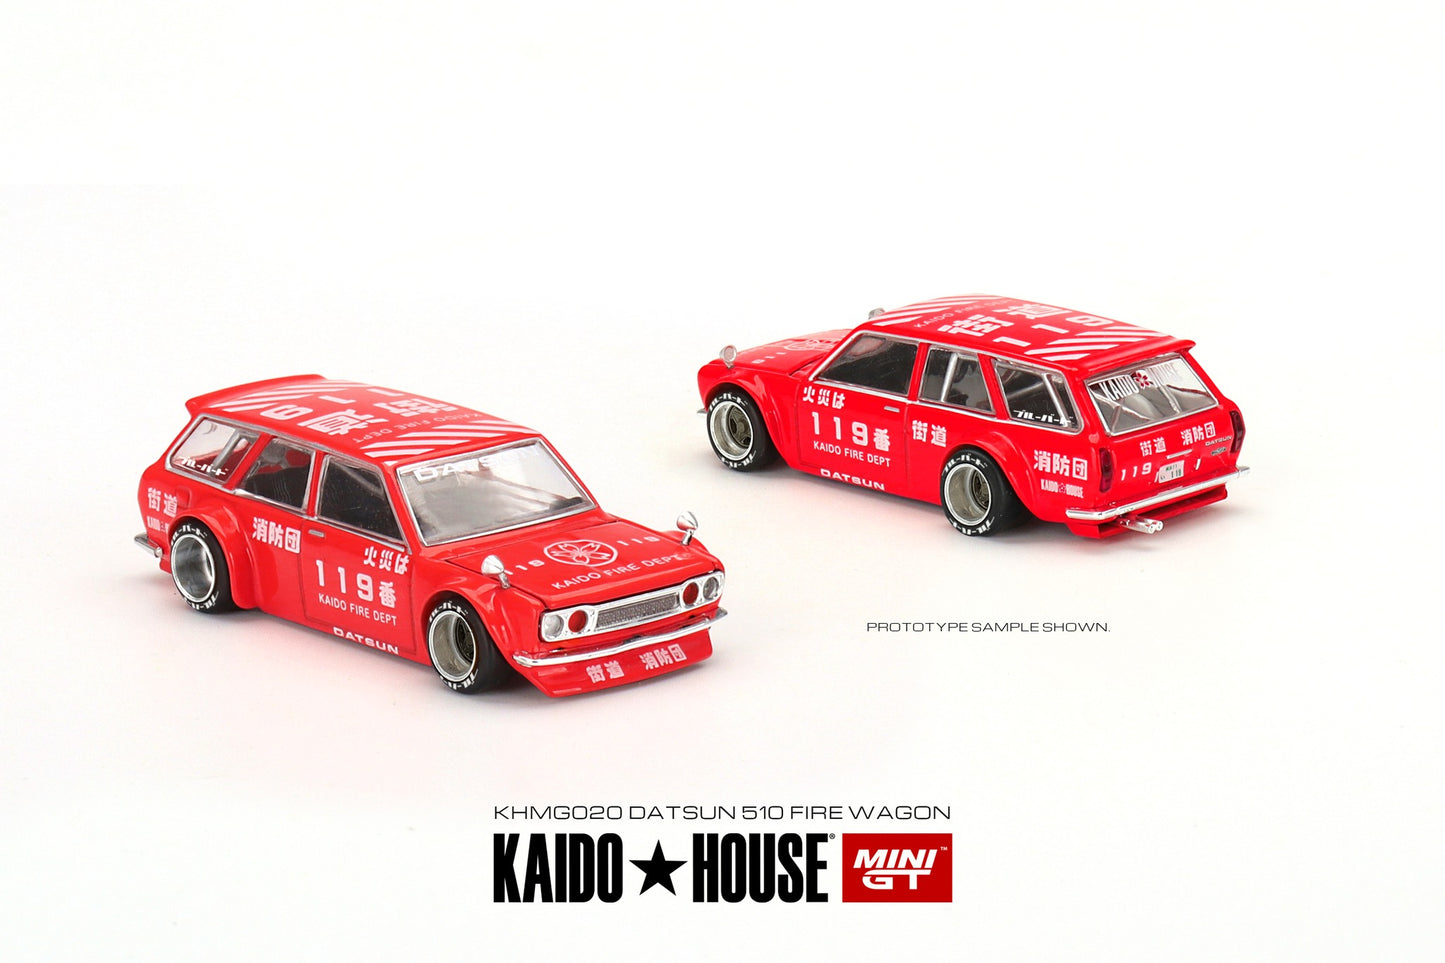 Mini GT x Kaido House Datsun 510 Wagon Fire V1